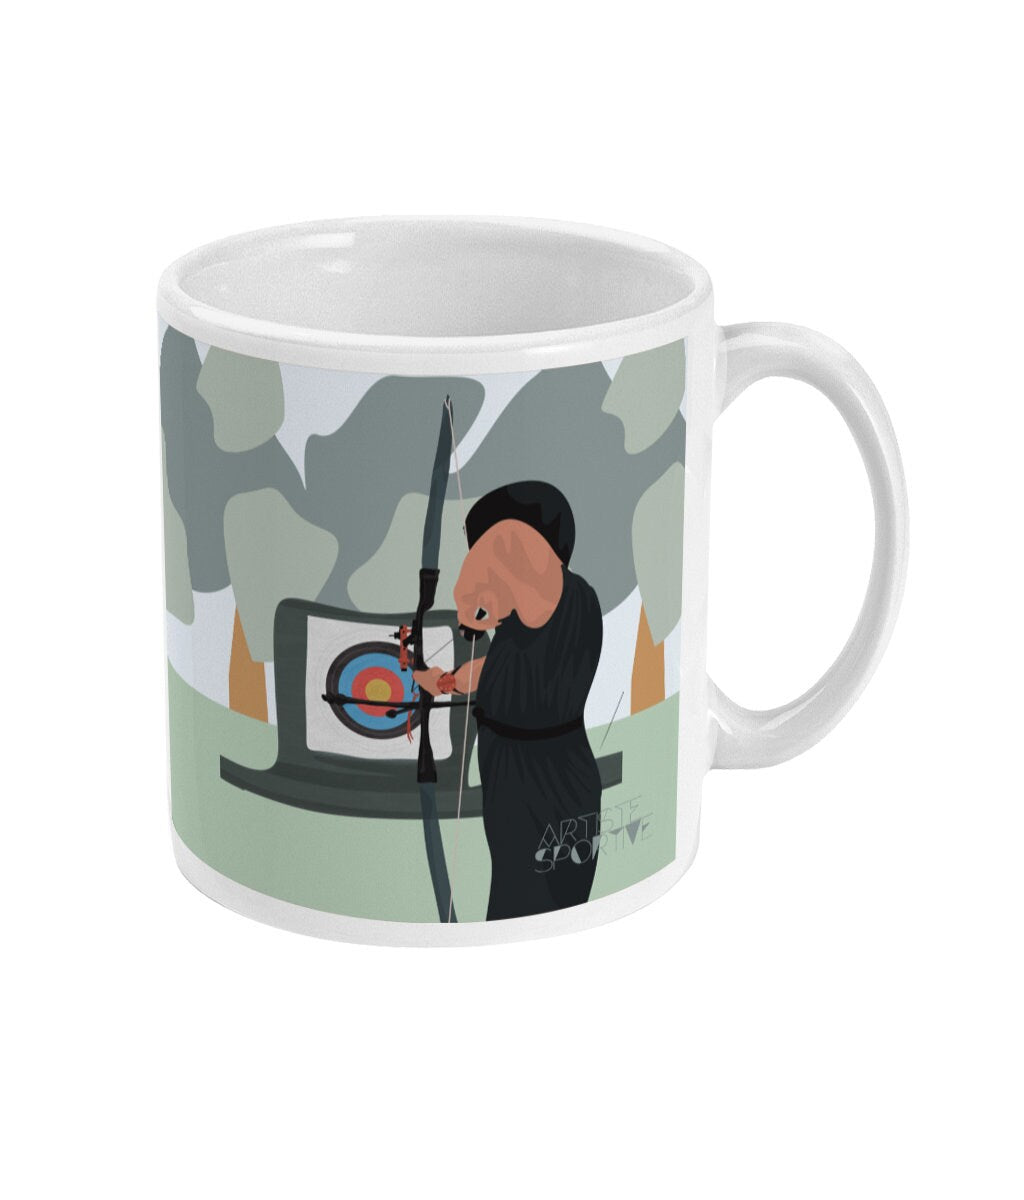 Archery cup or mug "The archer" - customizable